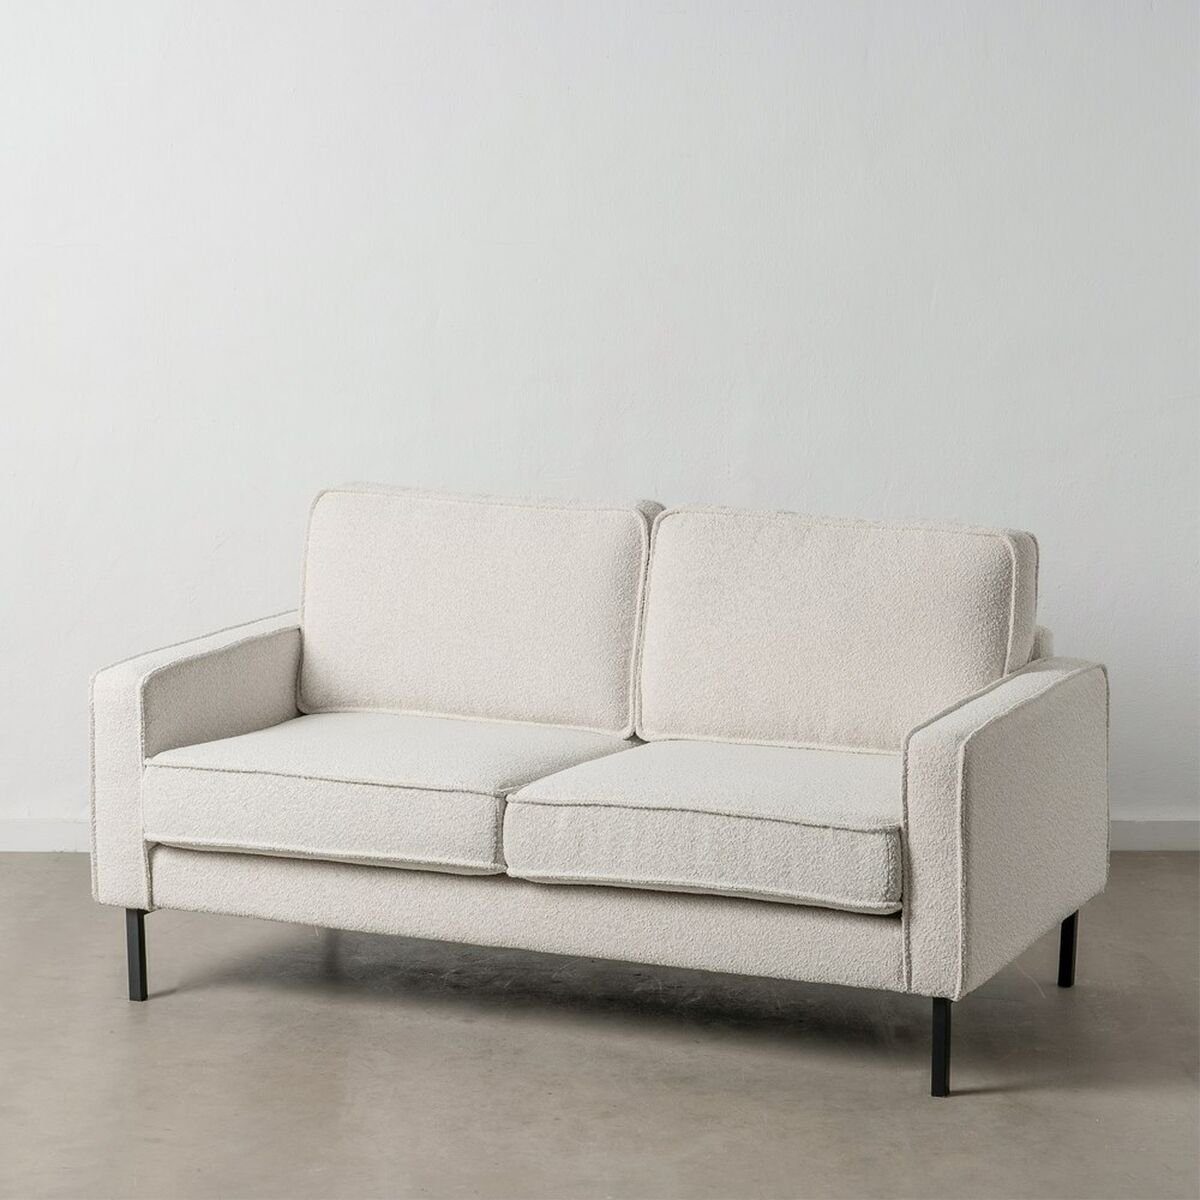 Bigbuy Sofa Sofa x 90 x 163 cm Metall synthetische Stoffe Beige 87